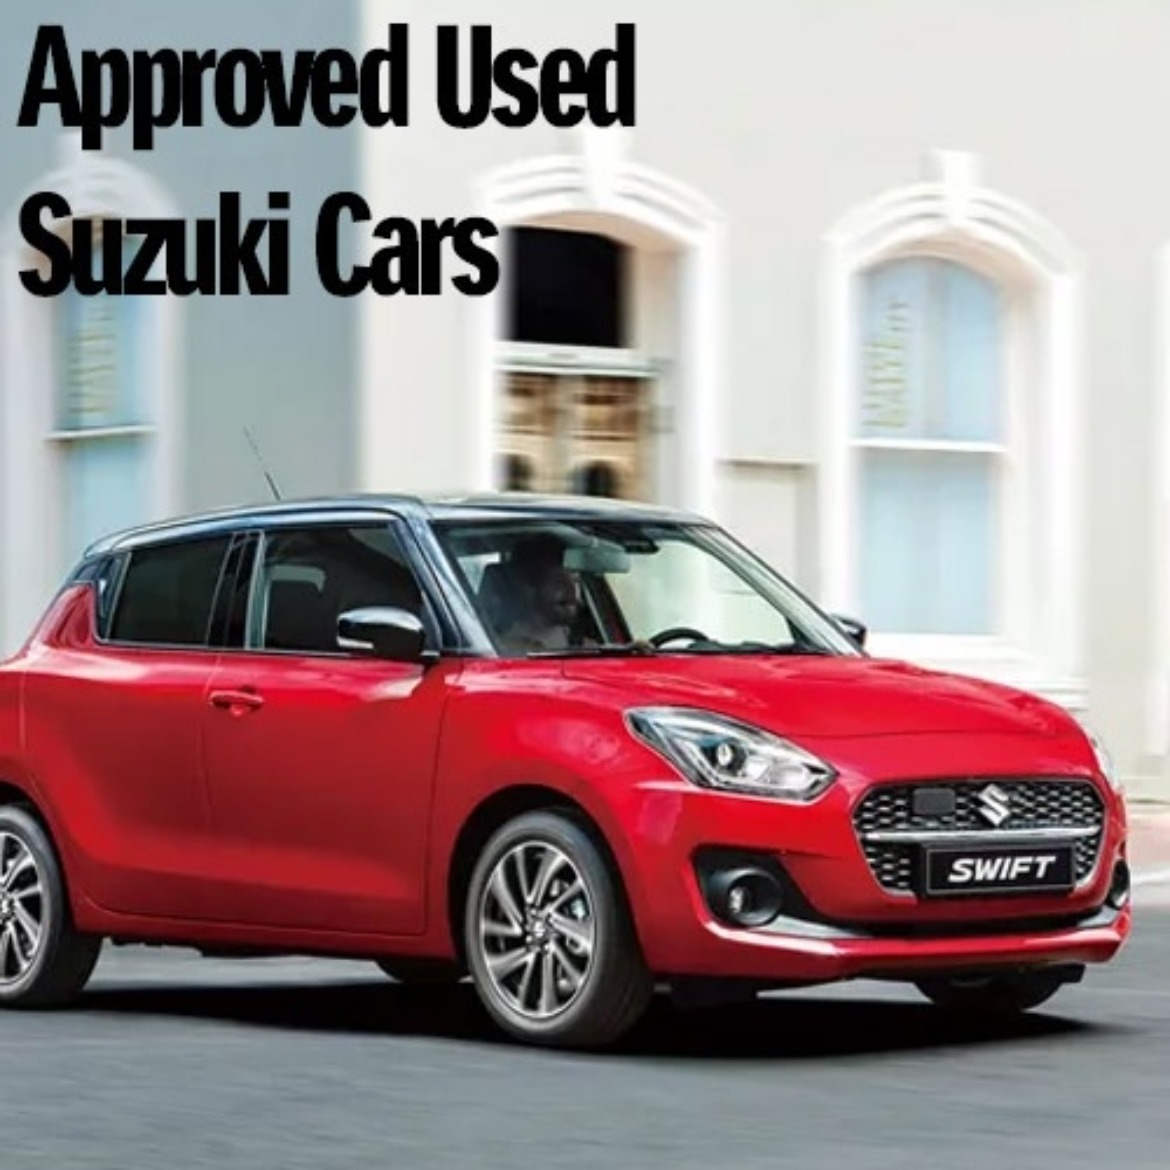 Approved Used Suzuki Cars in Drayton Motors Boston